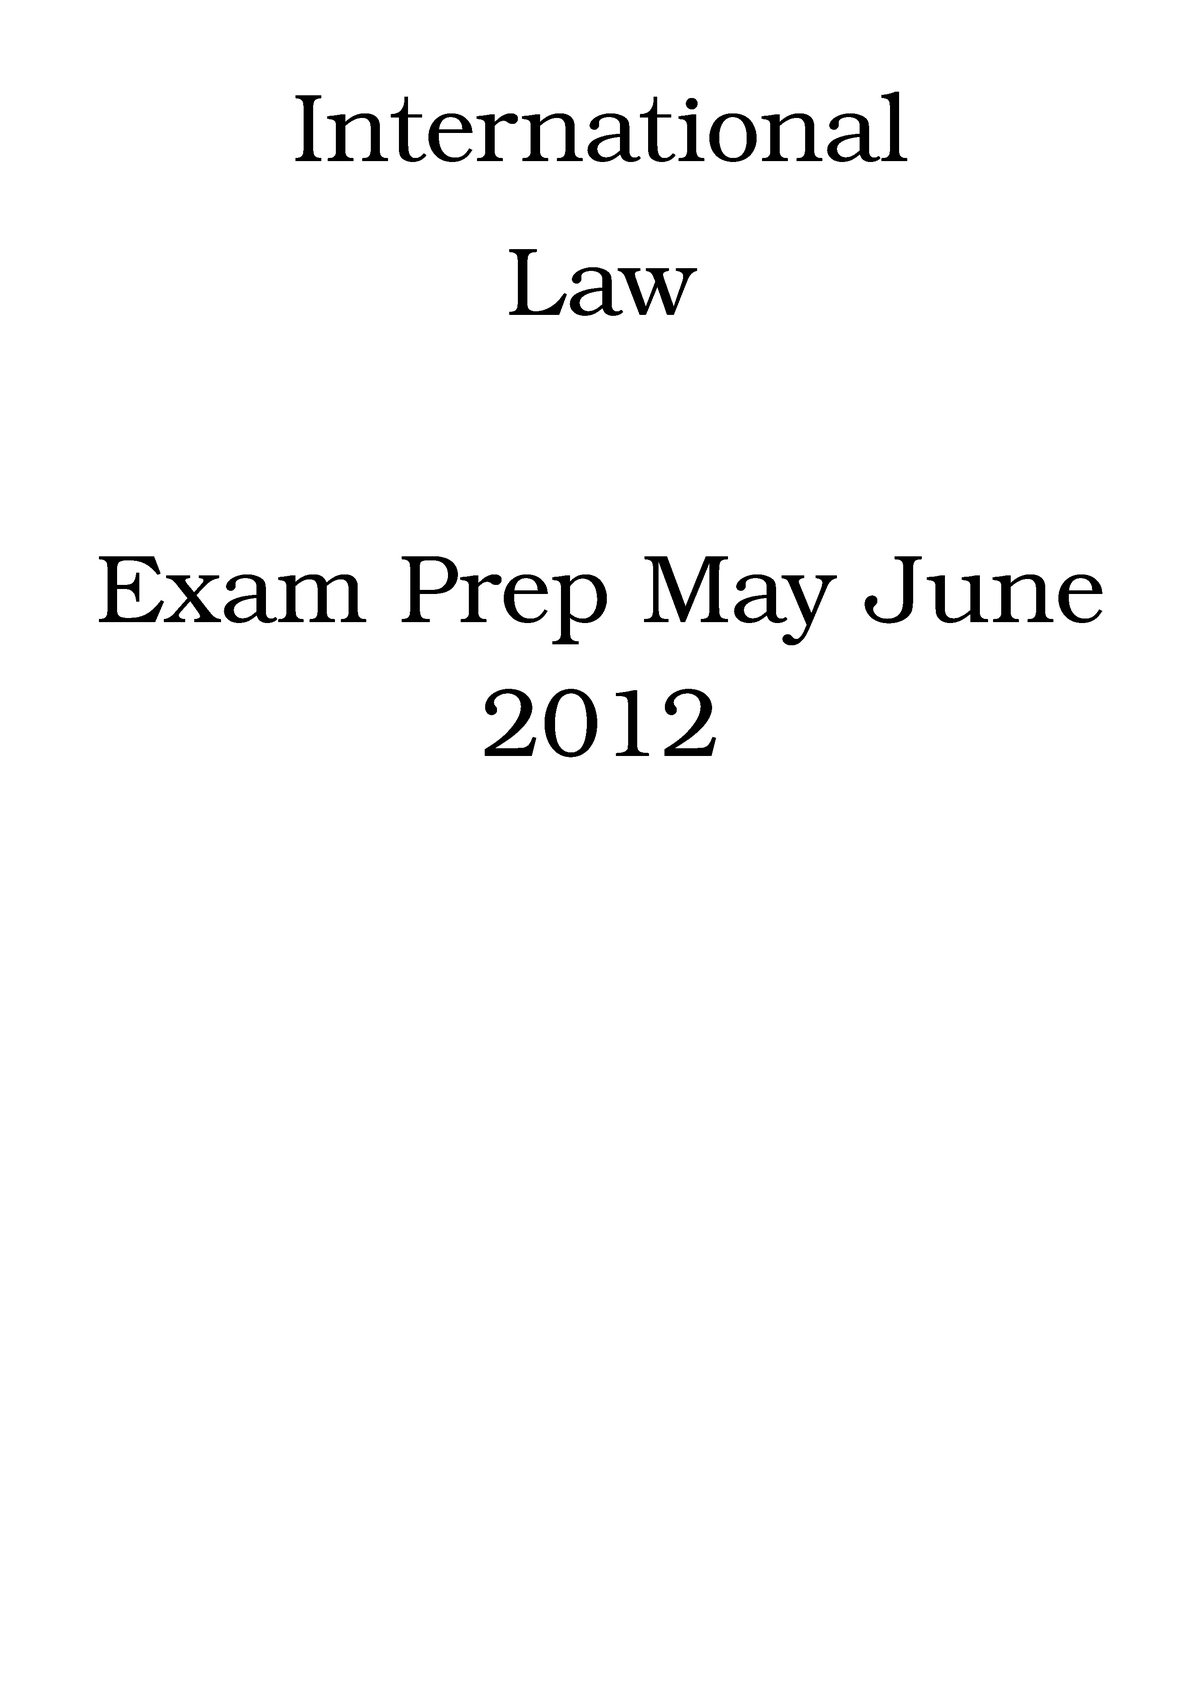 International law exam prep may june 2012 International Law Exam Prep